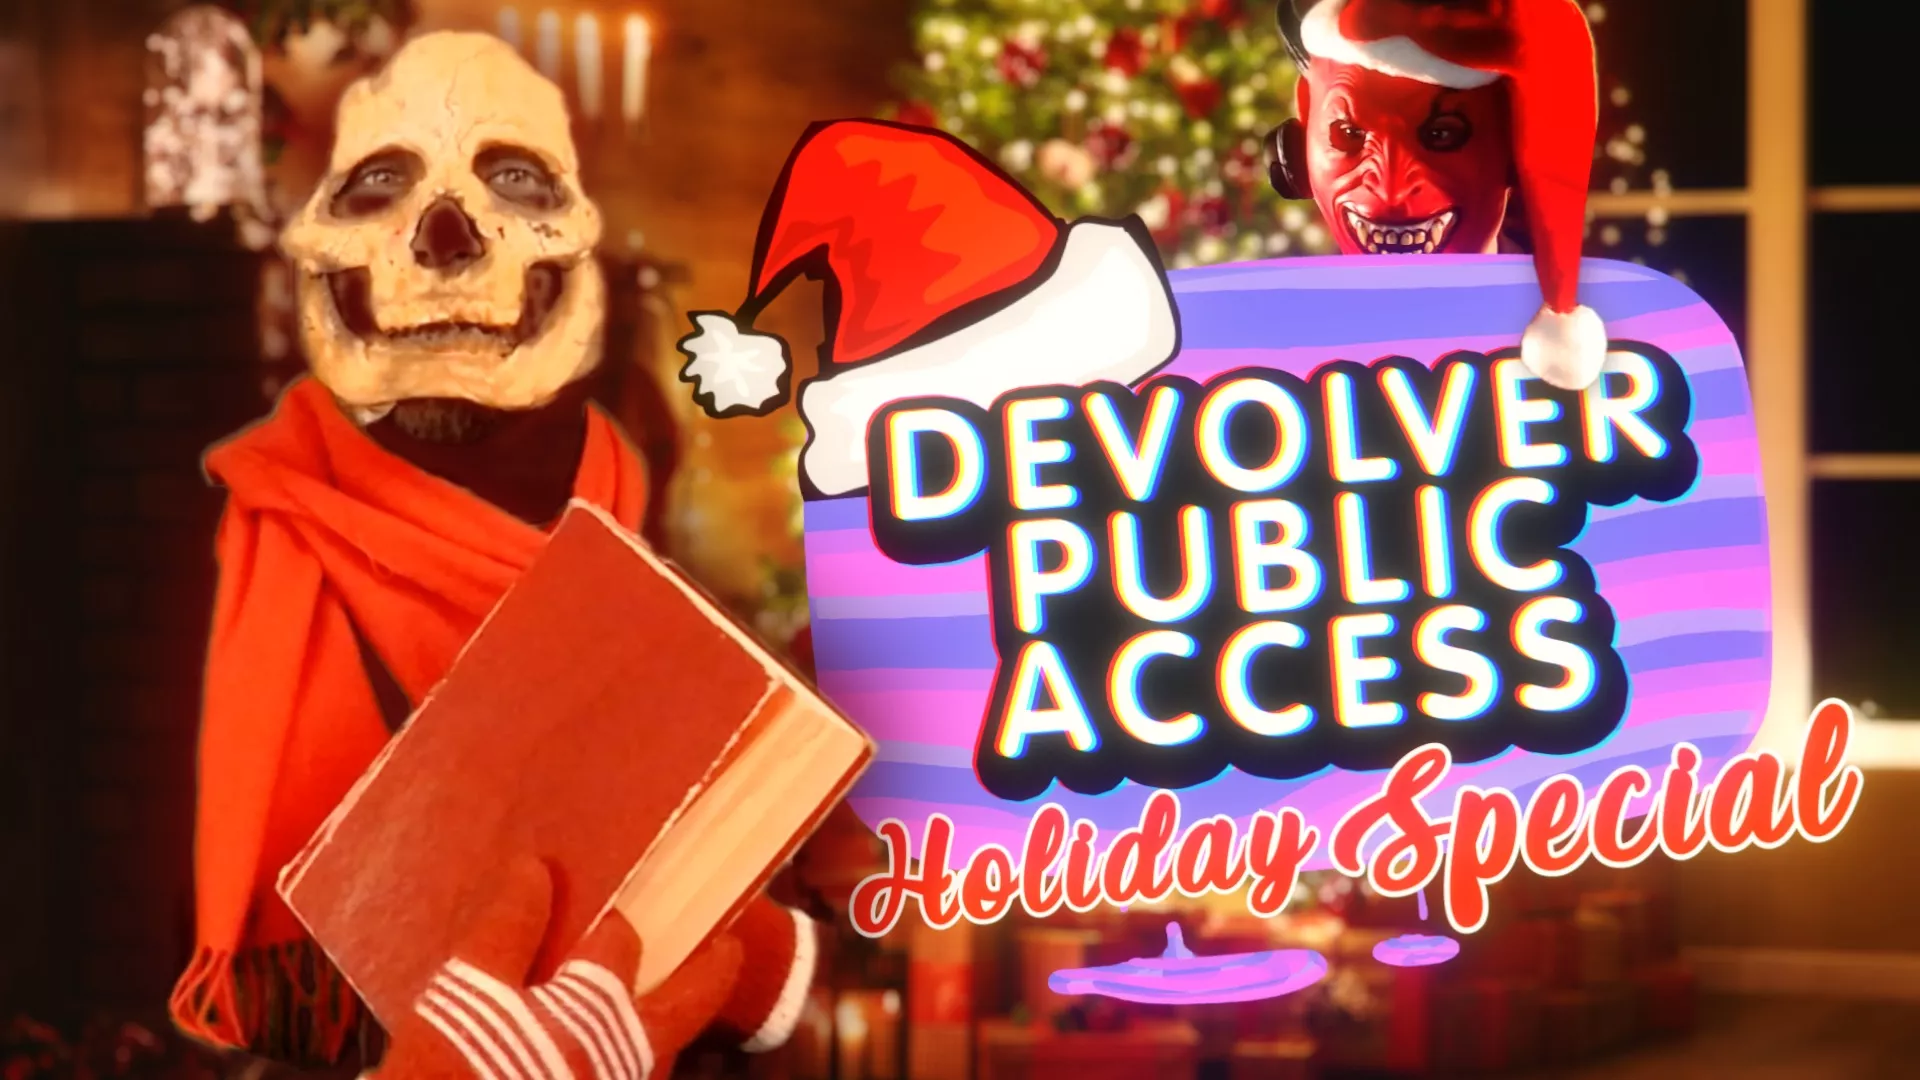 Devolver Public Access Holiday Special heute Abend um 19 Uhr Heropic